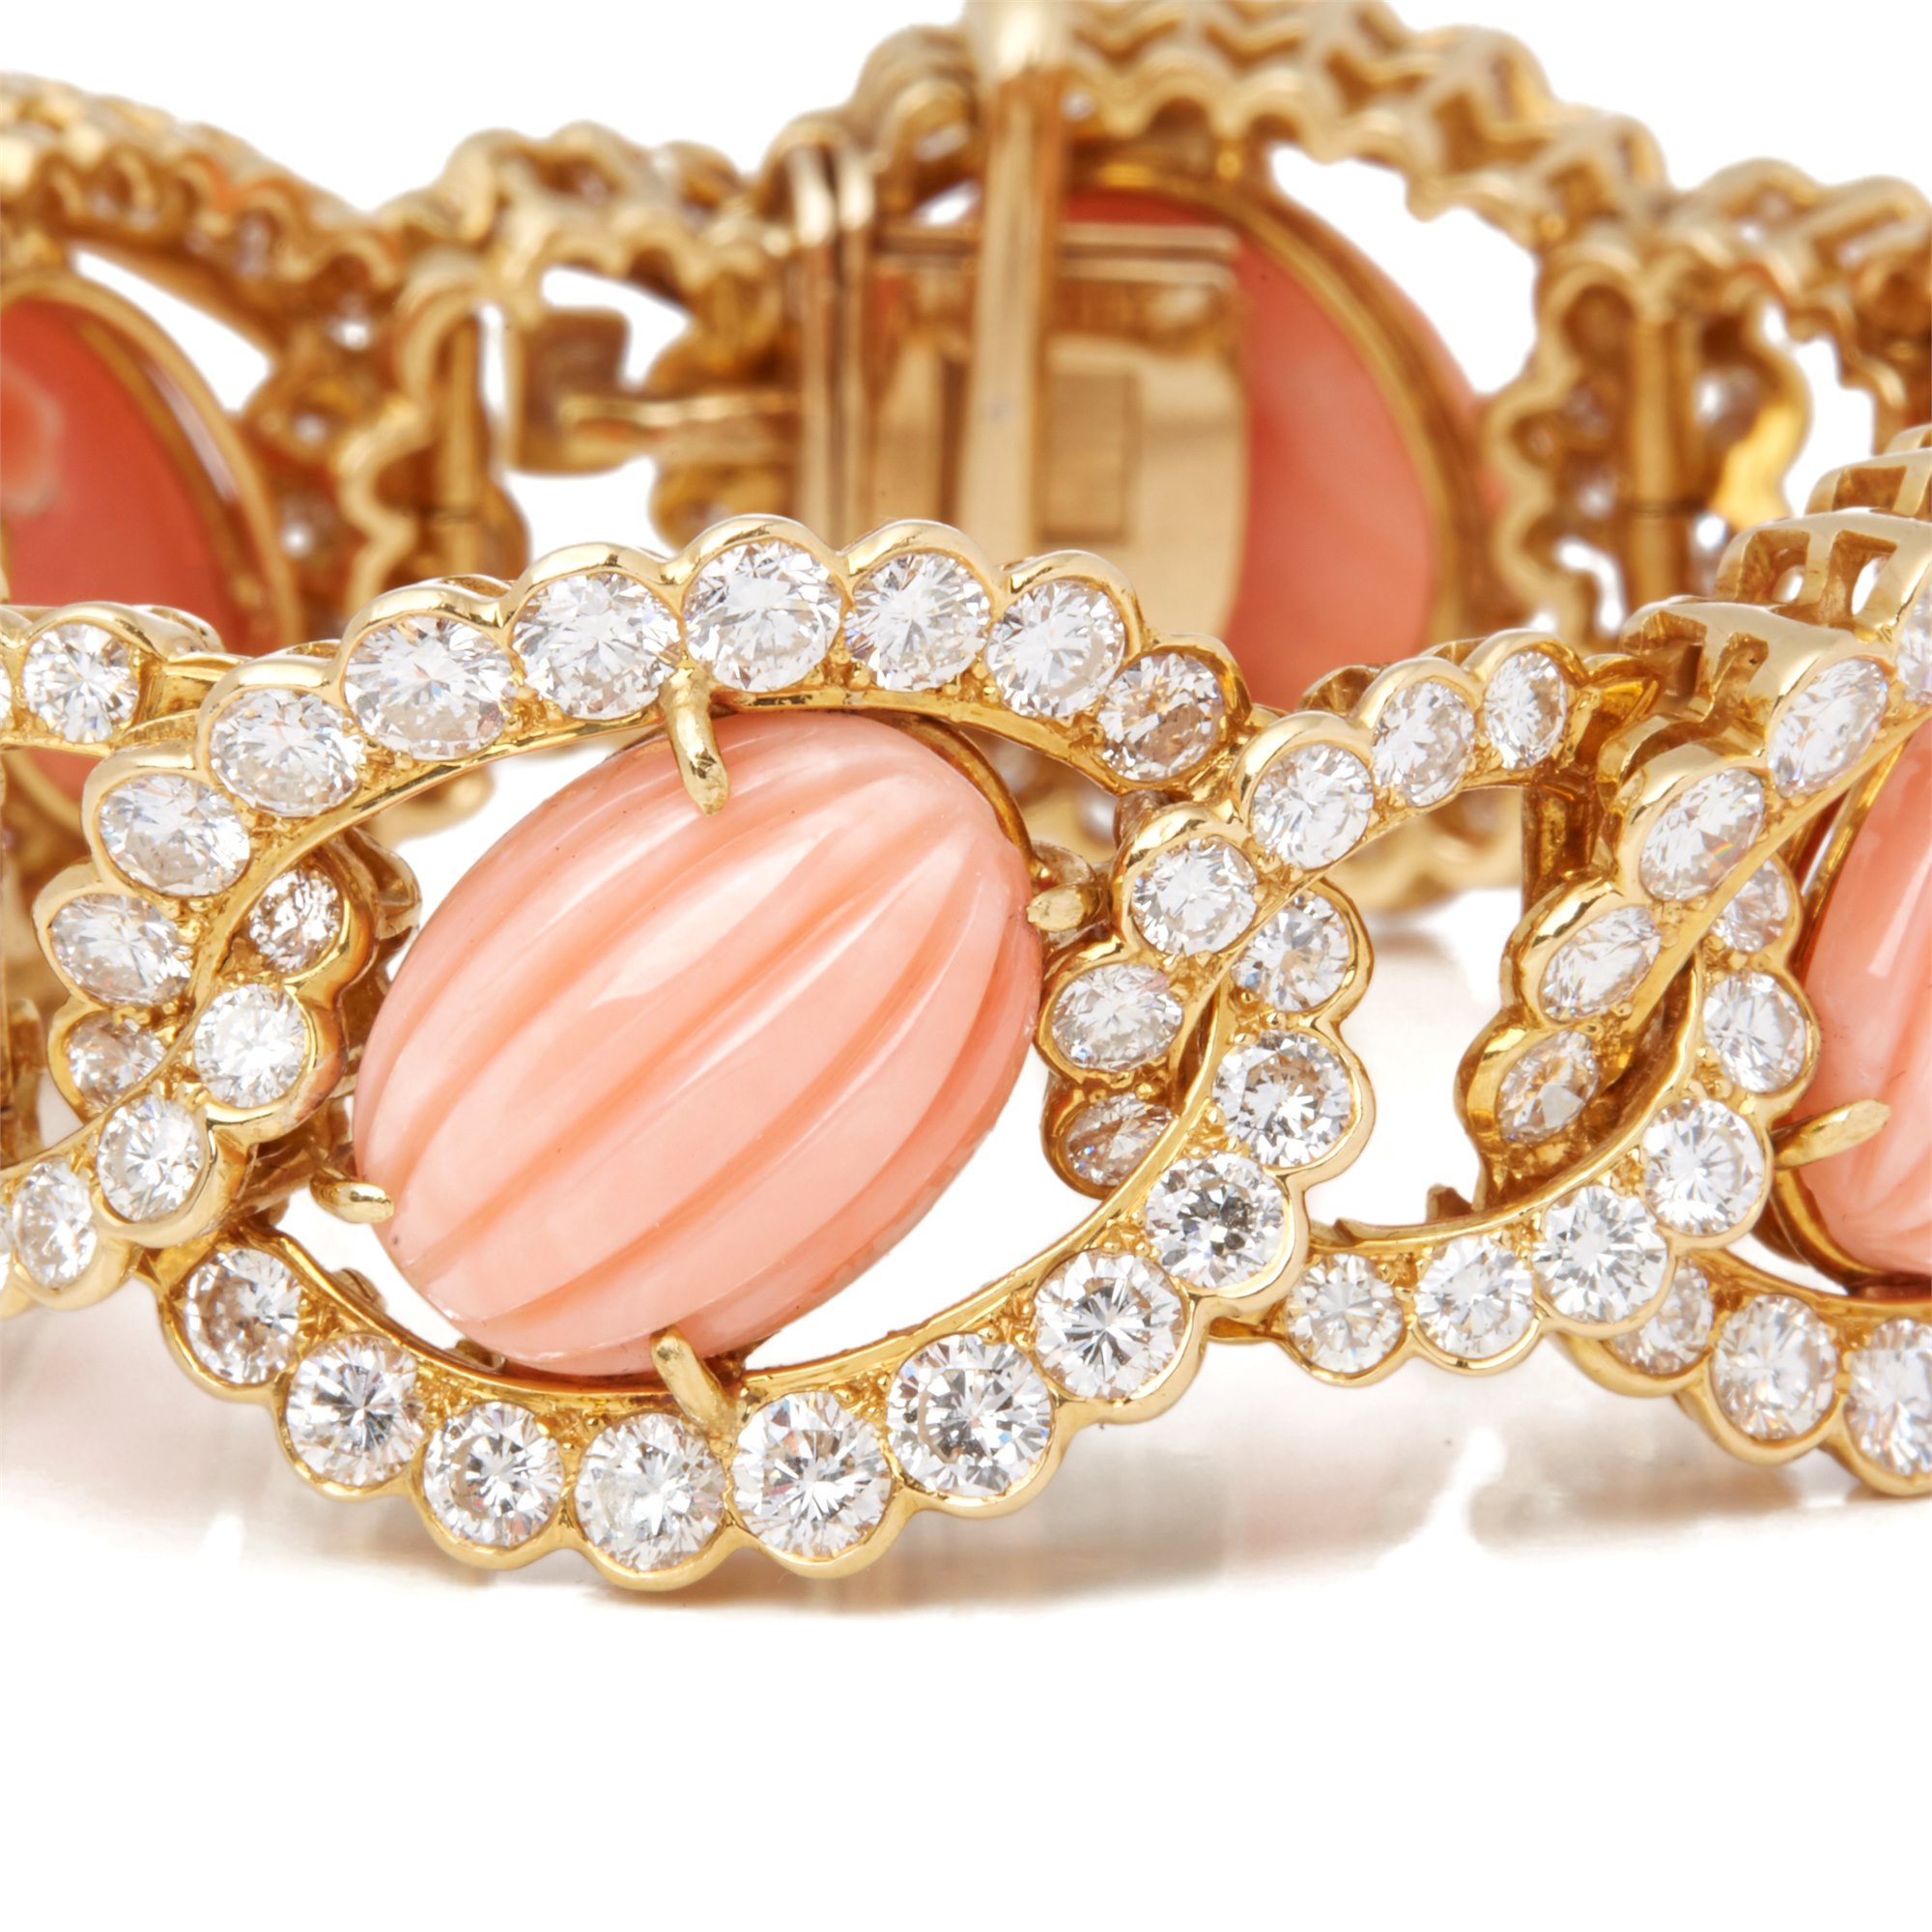 Van Cleef & Arpels 18k Yellow Gold Coral and Diamond Bracelet